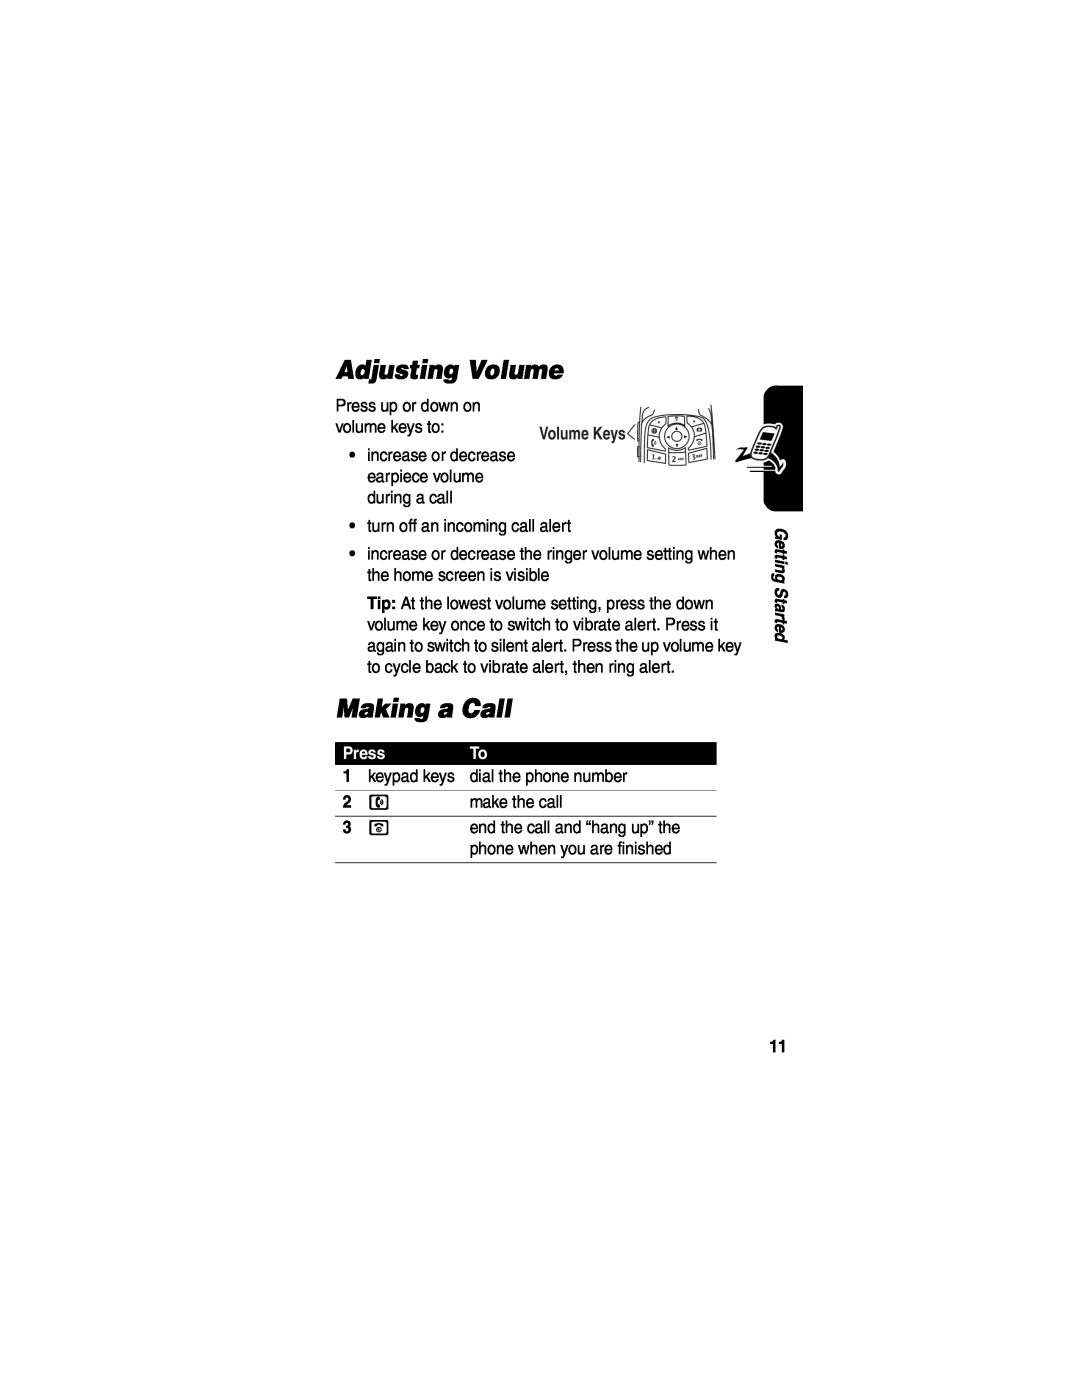 Motorola V555 manual Adjusting Volume, Making a Call, Press 